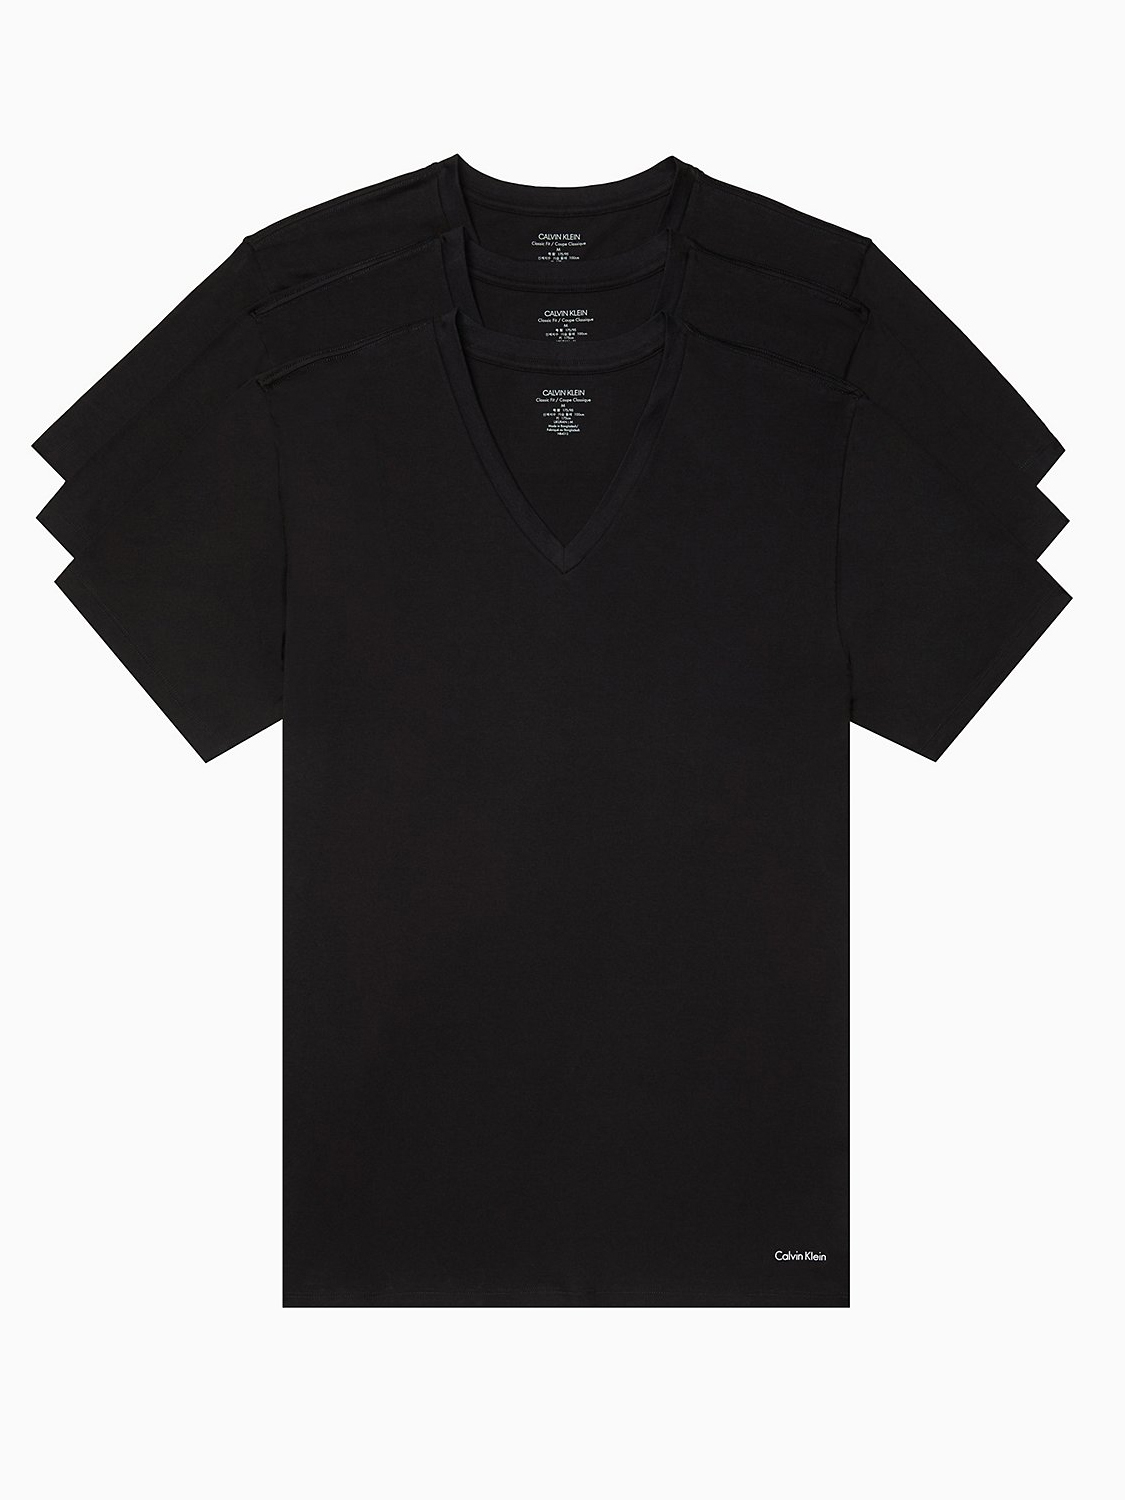 Calvin Klein Men's Cotton Classics Fit V-Neck T-Shirt -3 Pack, Black, Large - image 1 of 2